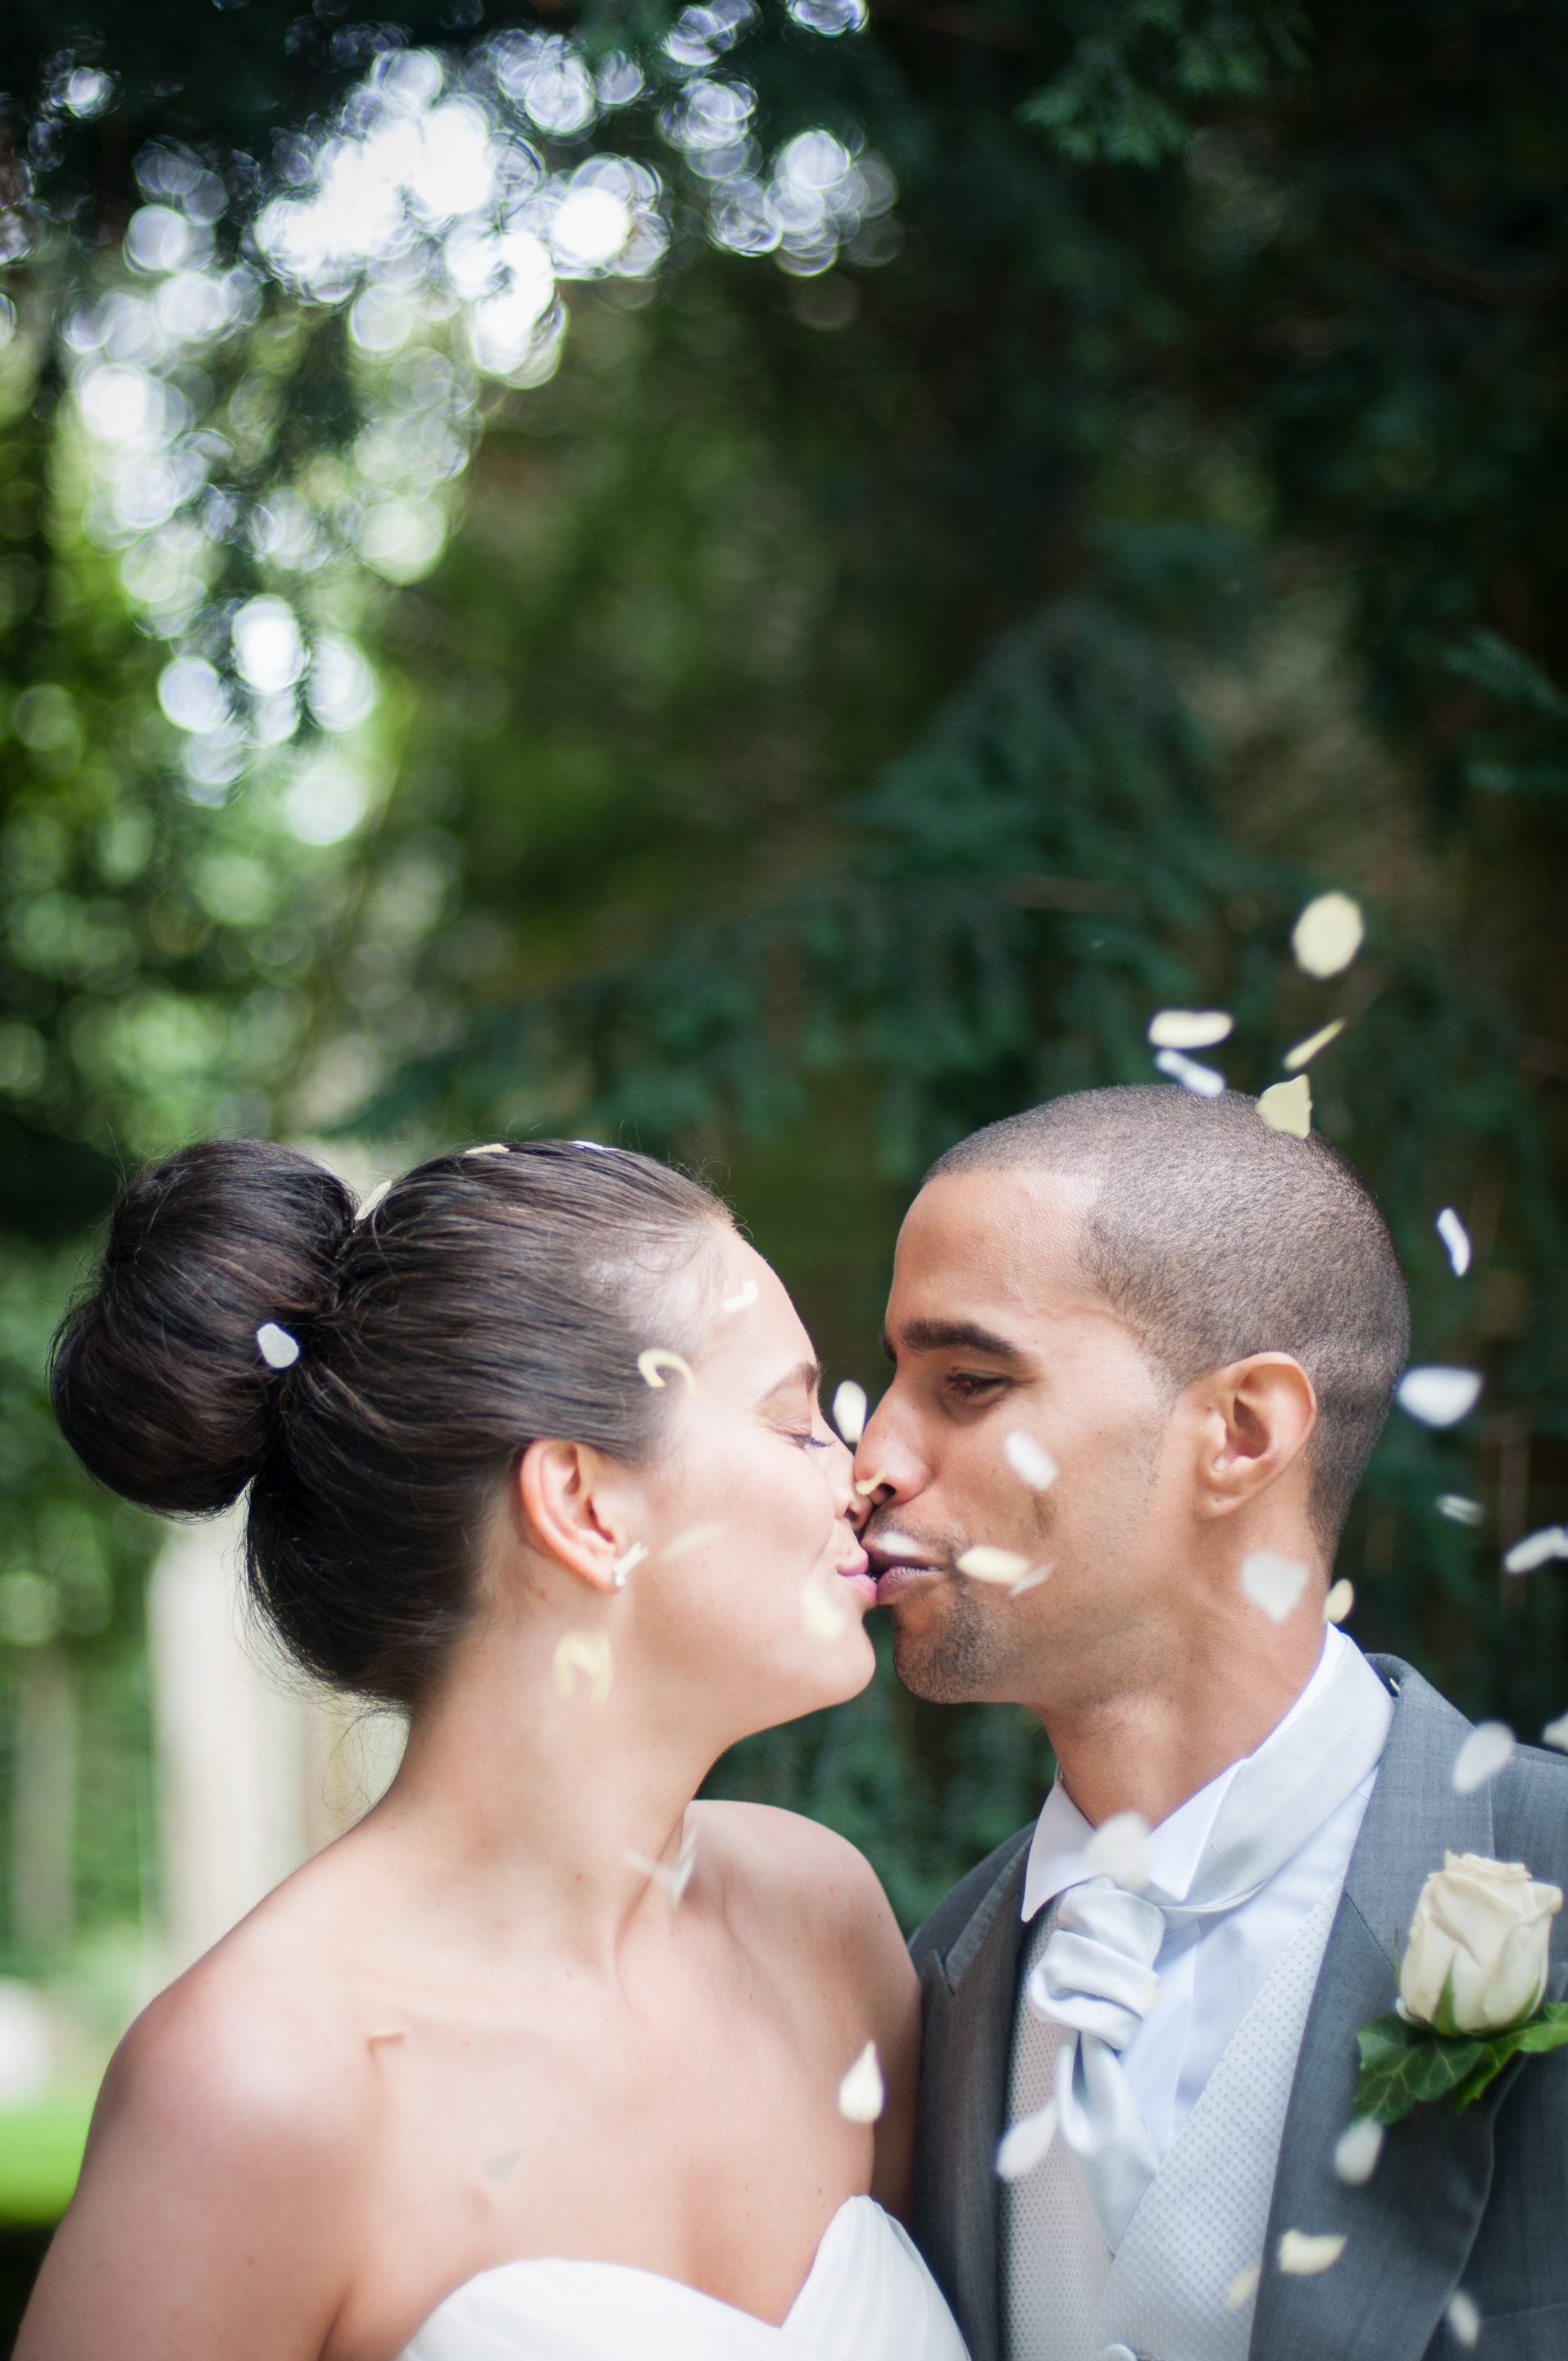 Private confetti shot with bride and groom